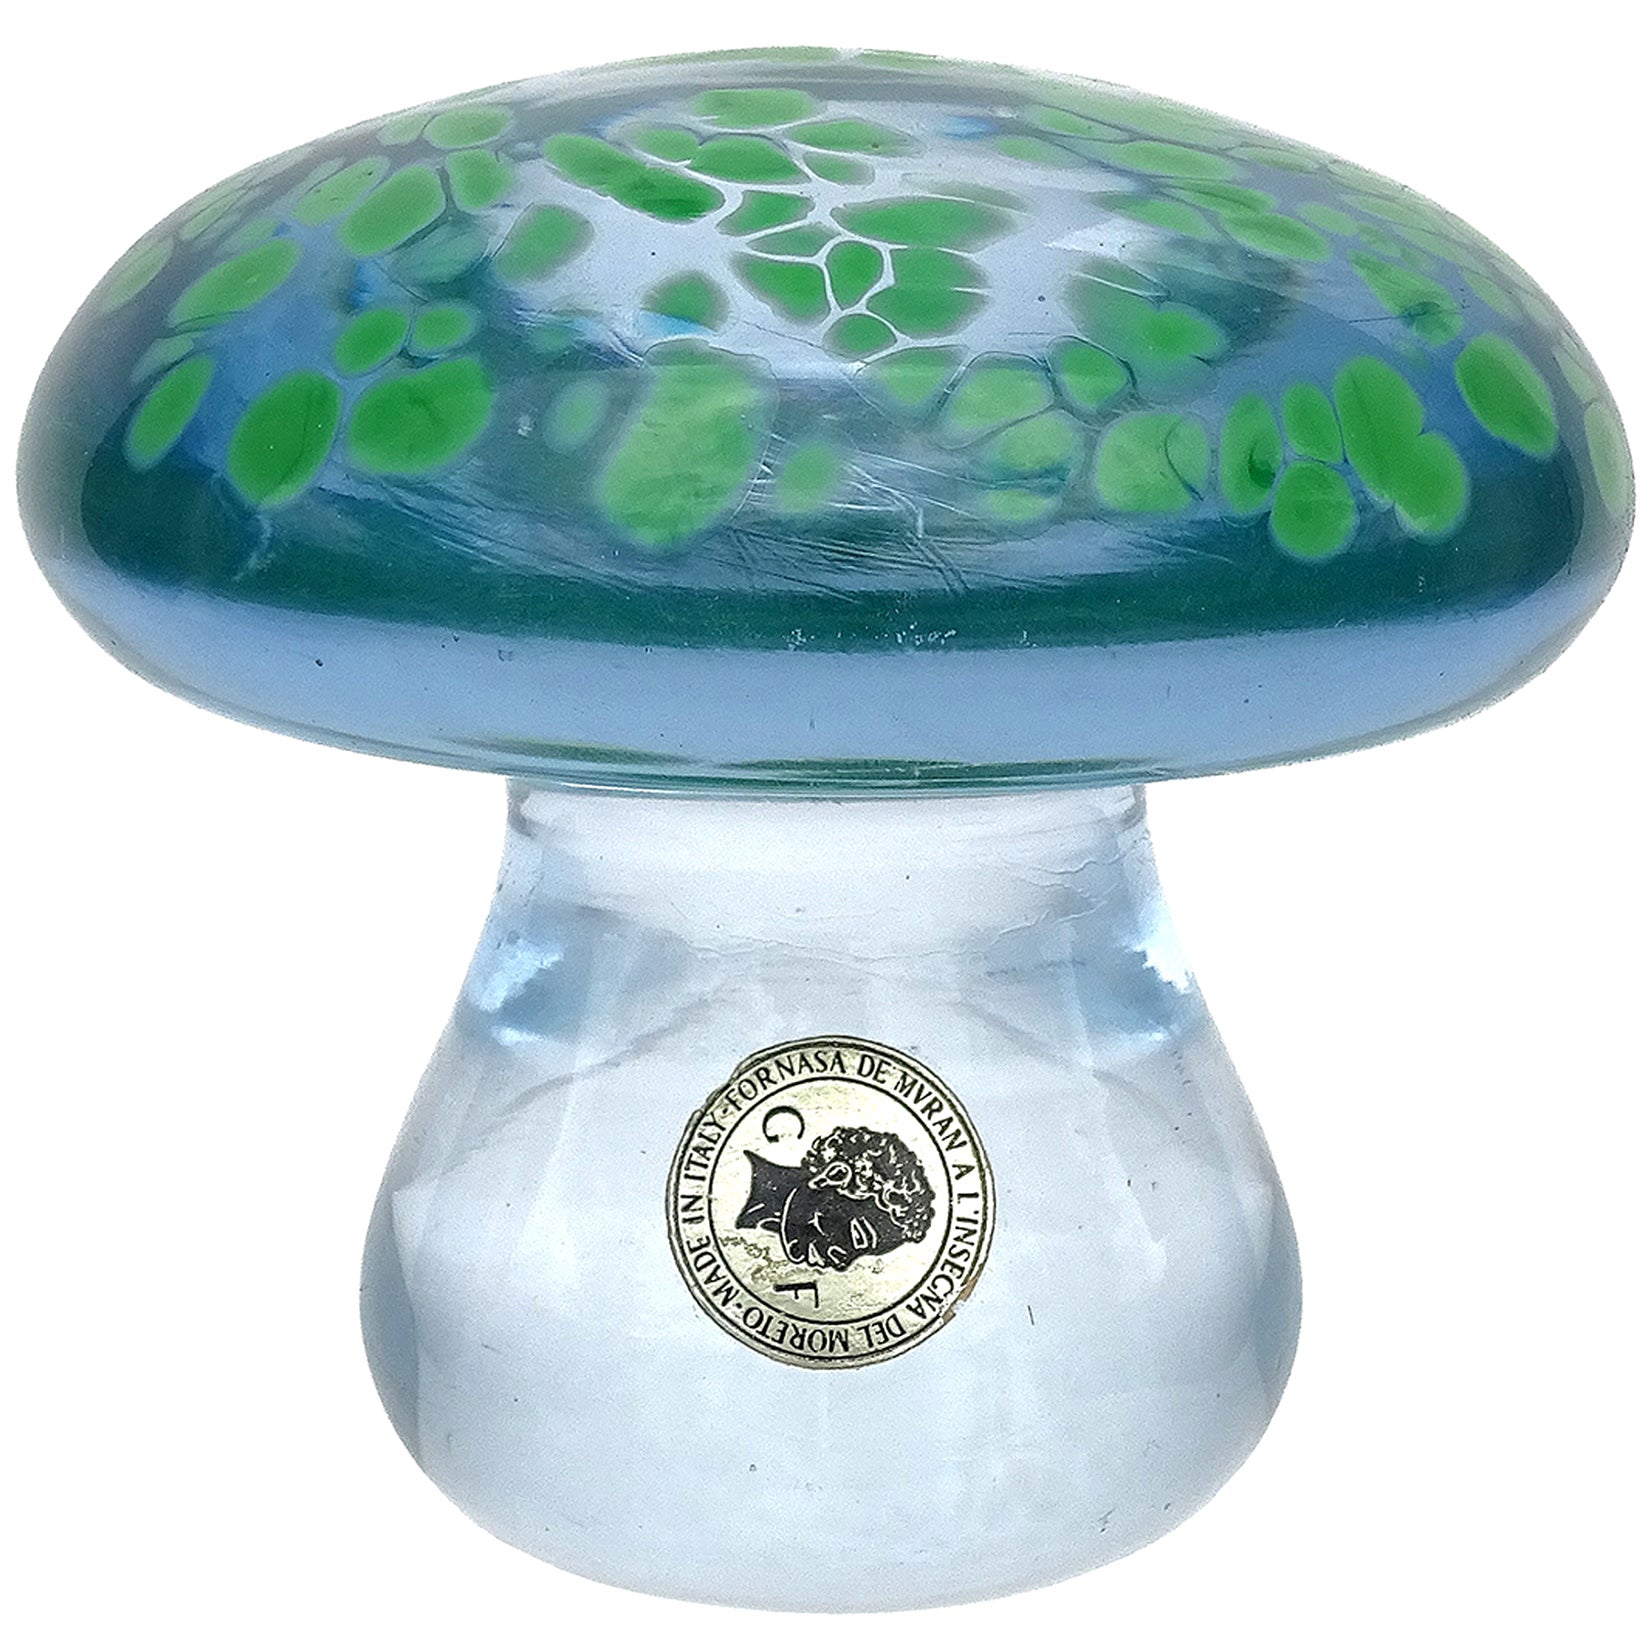 Sculpture en verre d'art italien de Murano bleu vert, presse-papier champignon toadstool champignon